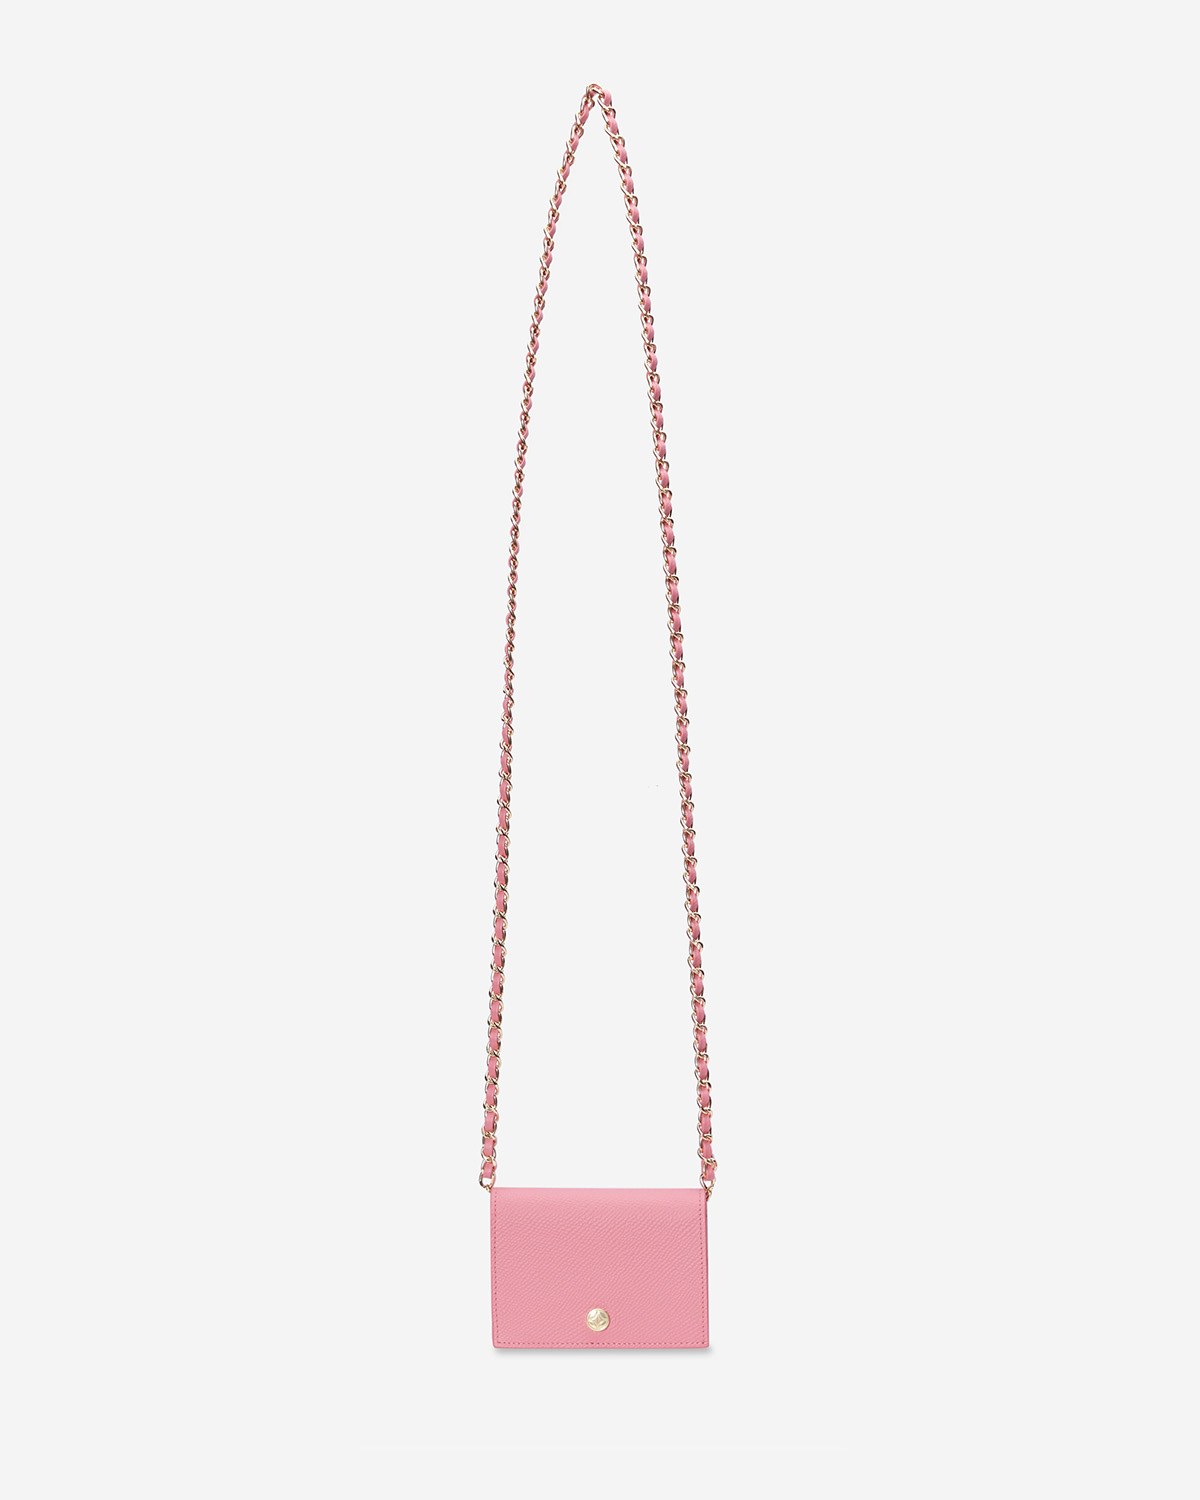 VERA Emily Flap Wallet with Leather Braided Gold Chain in Creative Pink กระเป๋าสตางค์หนังแท้ แบบเปิดฝา พร้อมสายโซ่สีทองร้อยหนัง สีชมพู